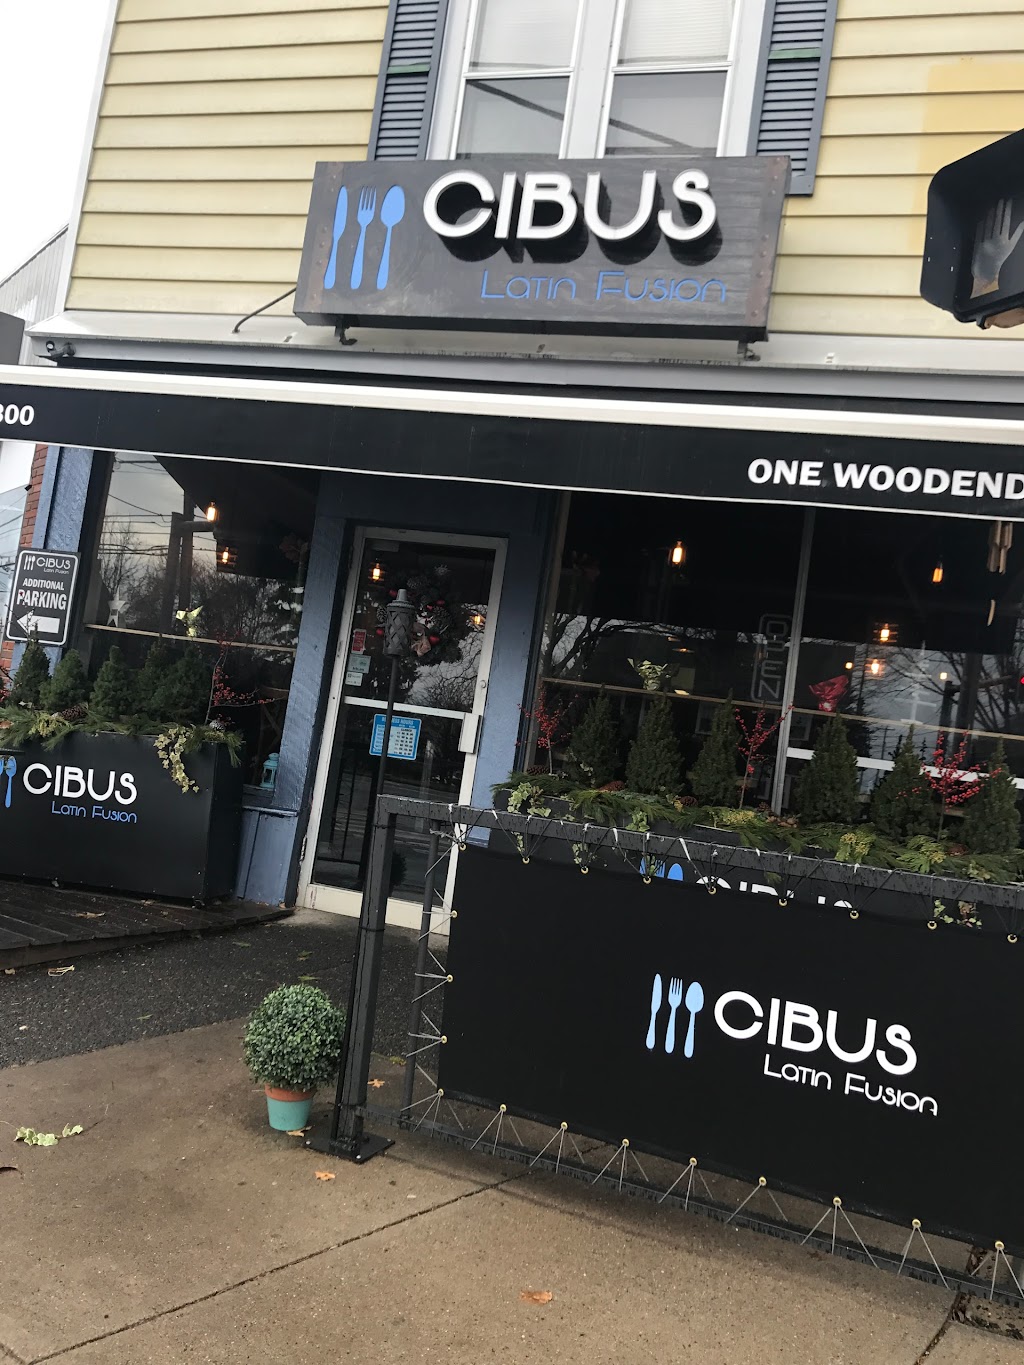 Cibus Latin Fusion | 1 Woodend Rd, Stratford, CT 06615 | Phone: (203) 908-4300